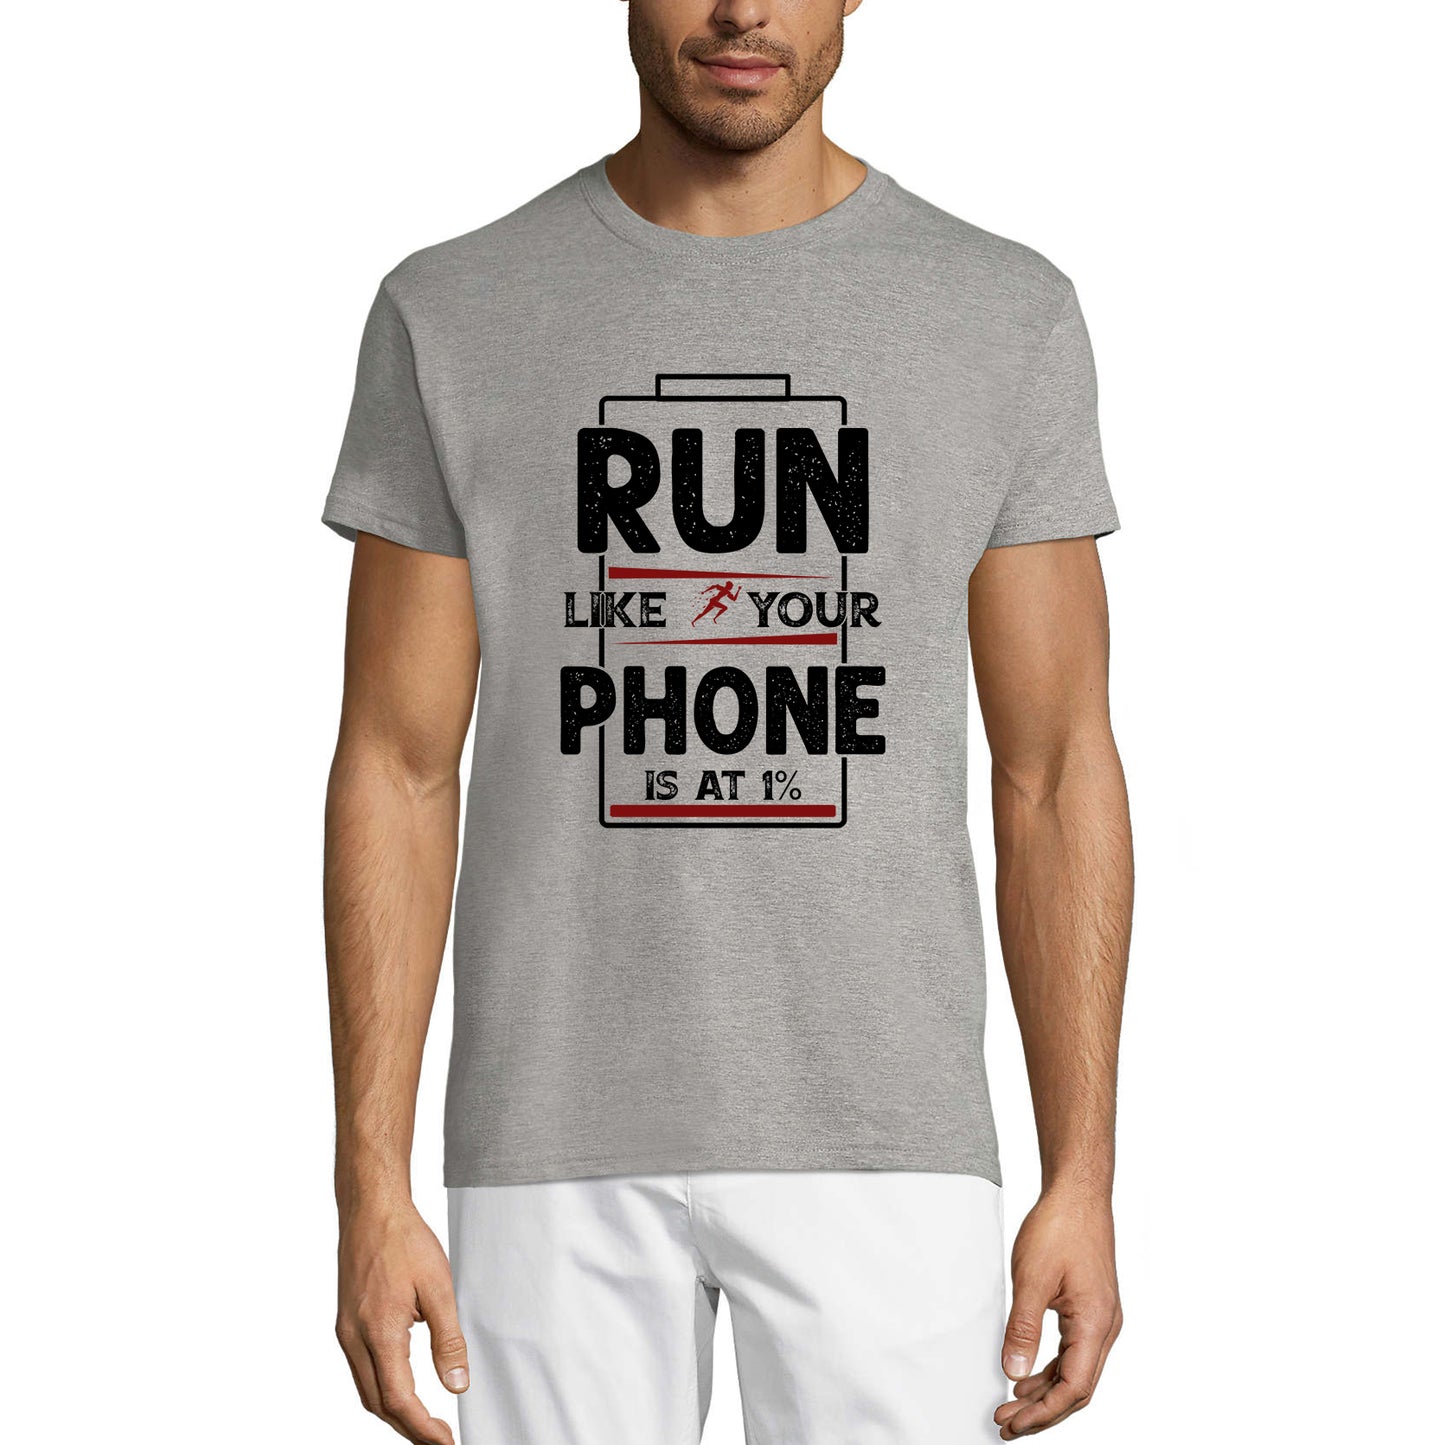 ULTRABASIC Men's Novelty T-Shirt Run Like Your Phone is at 1% - Funny Runner Tee Shirt